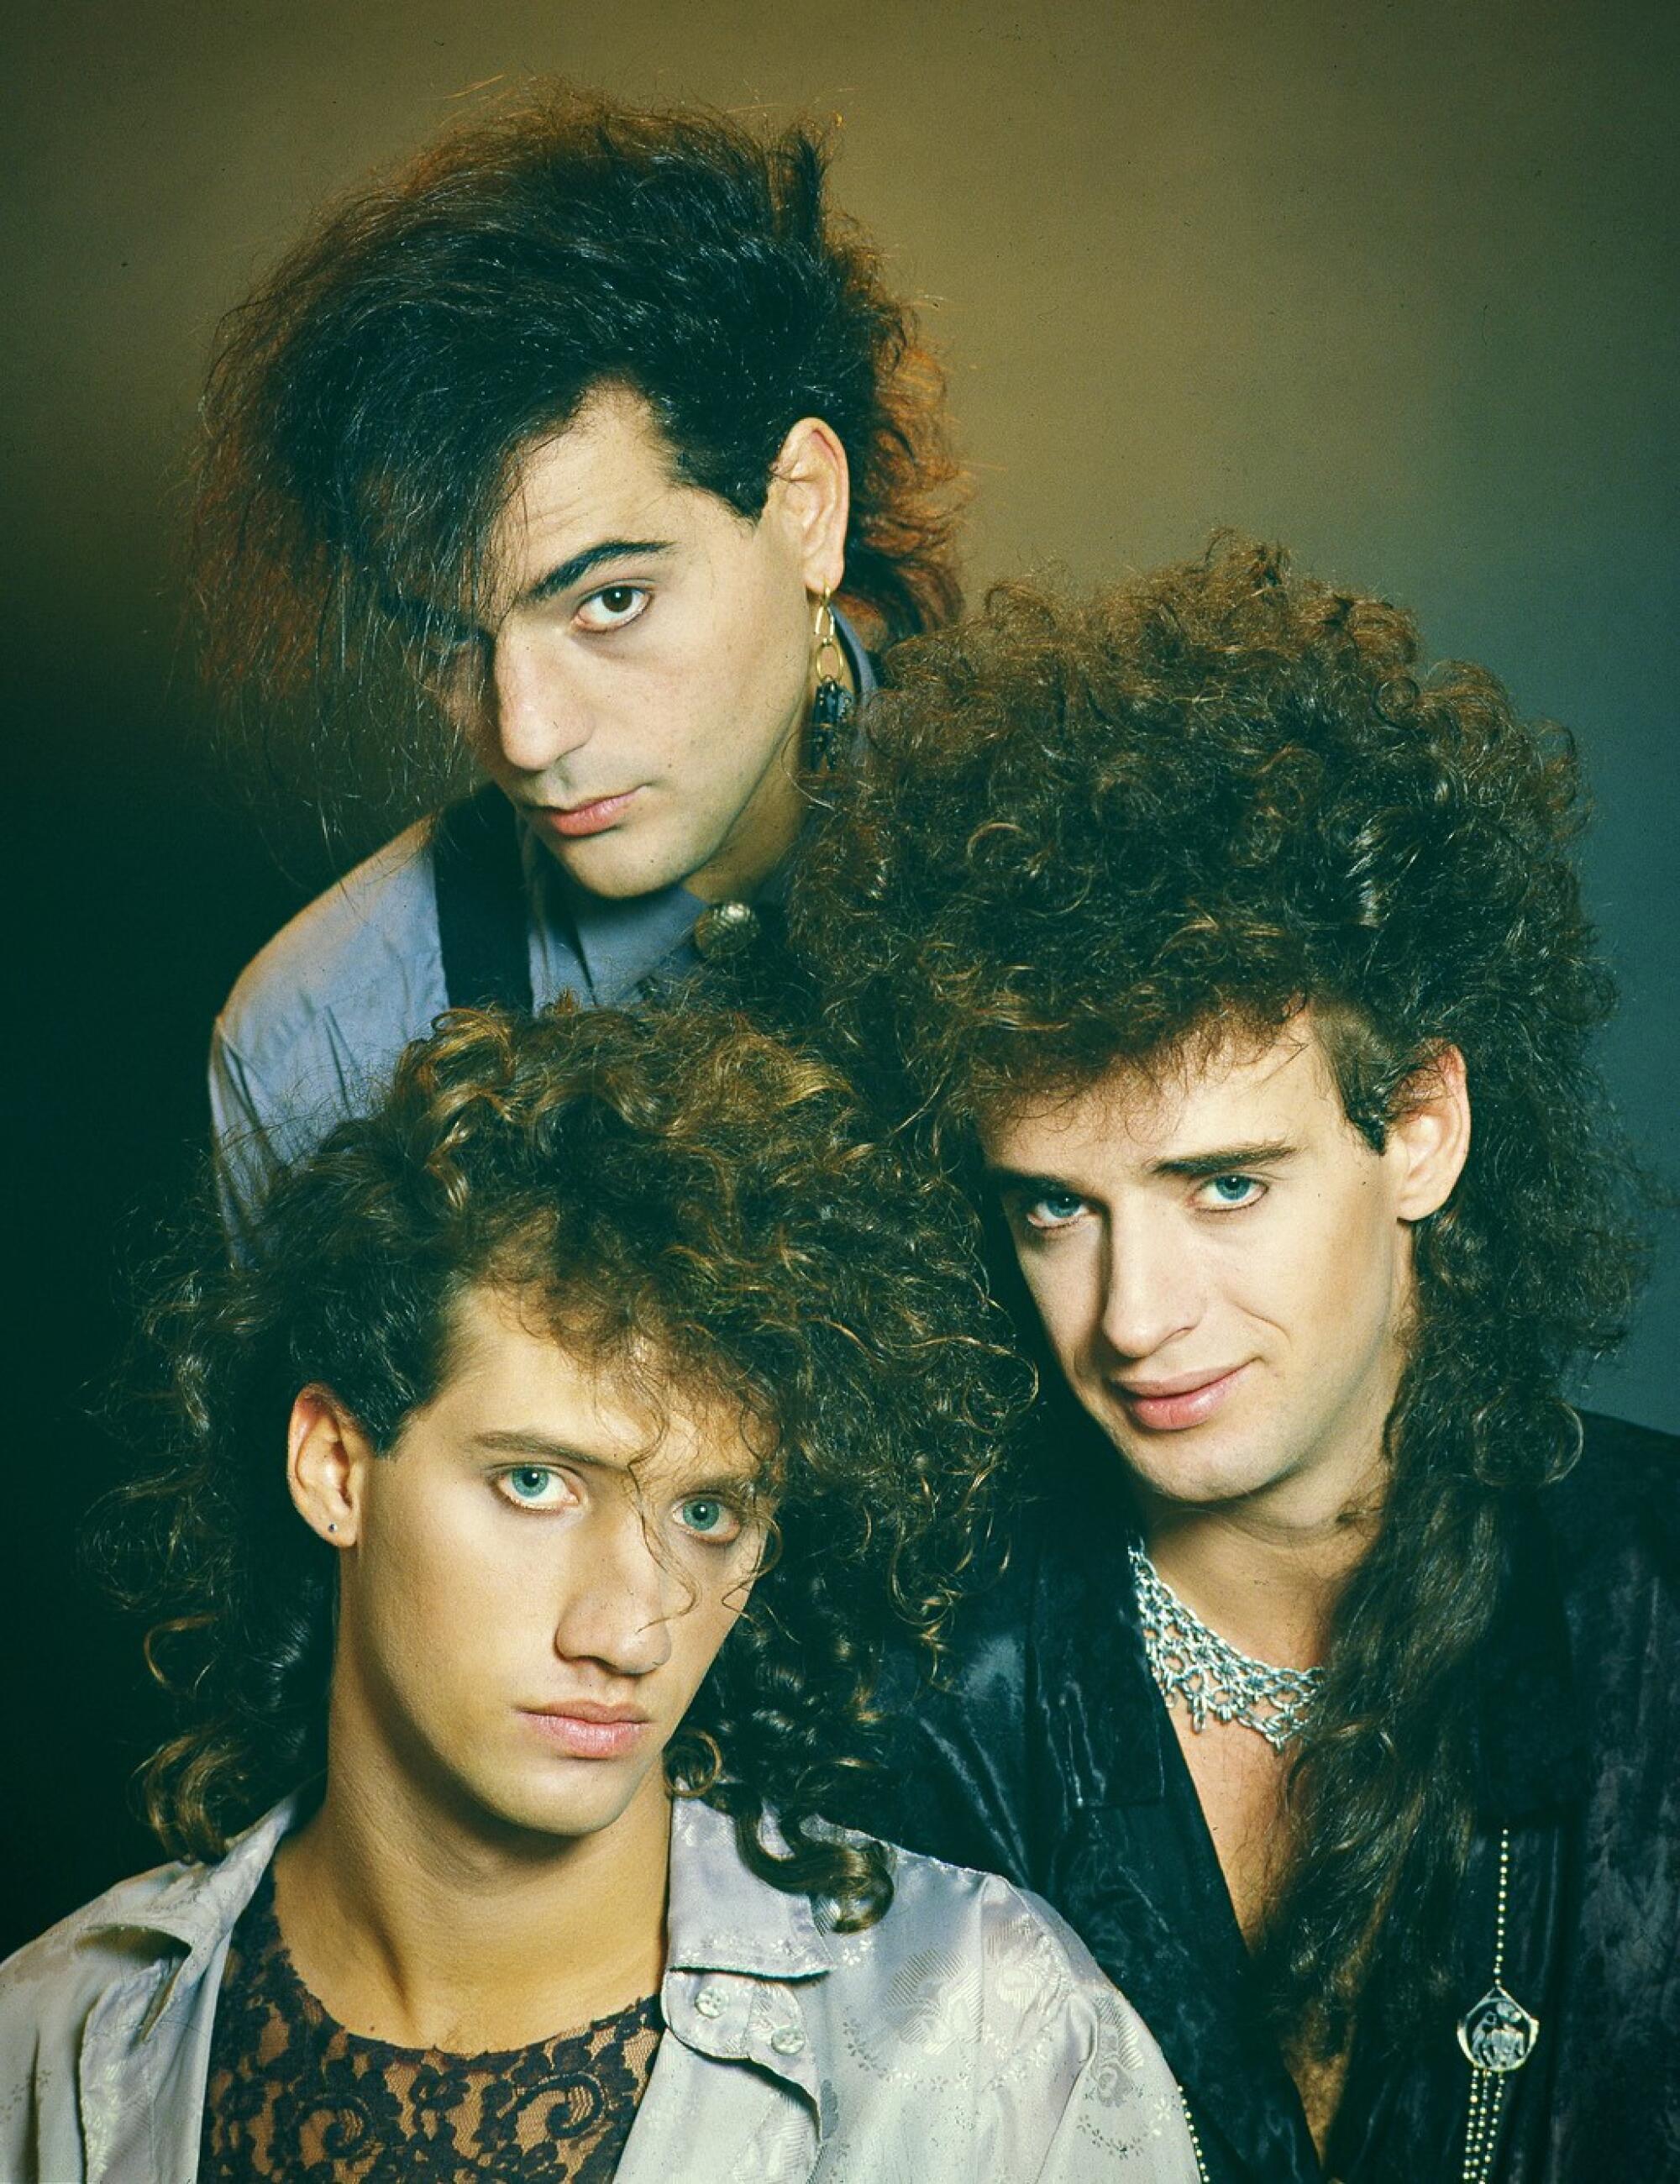 Zeta Bosio (arriba), Charly Alberti (izq.) y Gustavo Cerati (der.), Soda Stereo, revolucionaron los años 80 